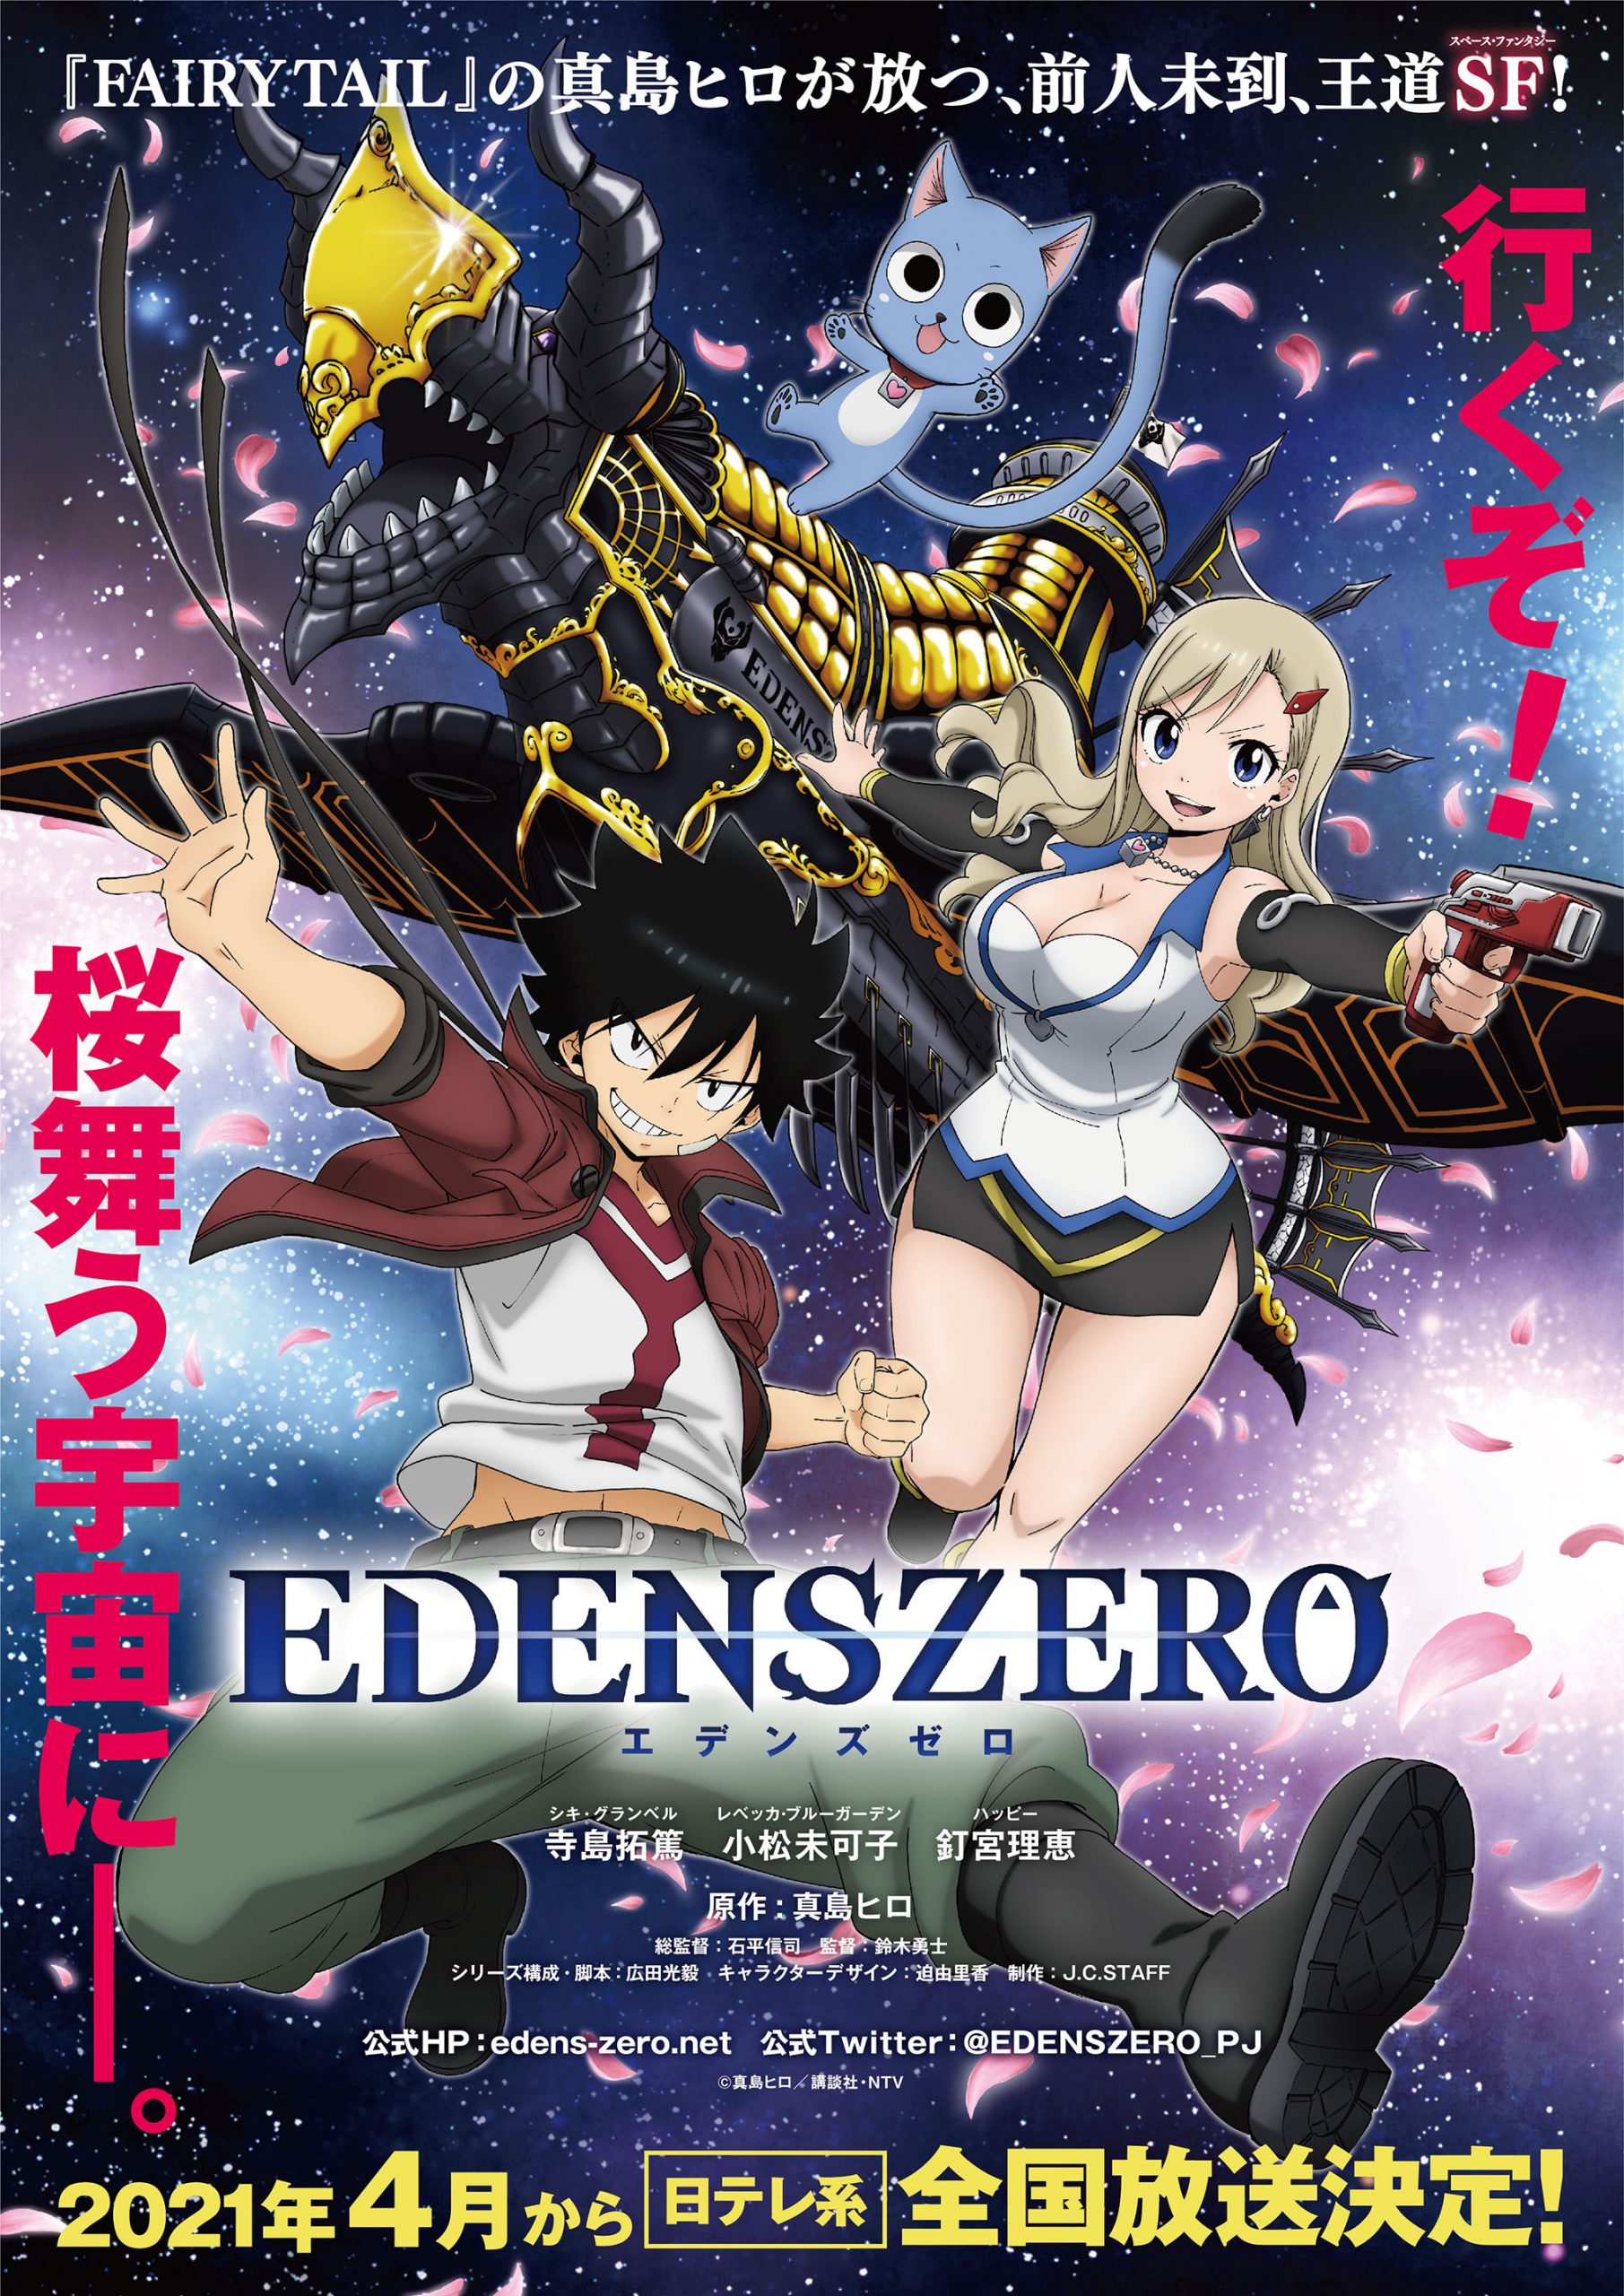 ASCA and Takanori Nishikawa set to thrill fans with Edens Zero